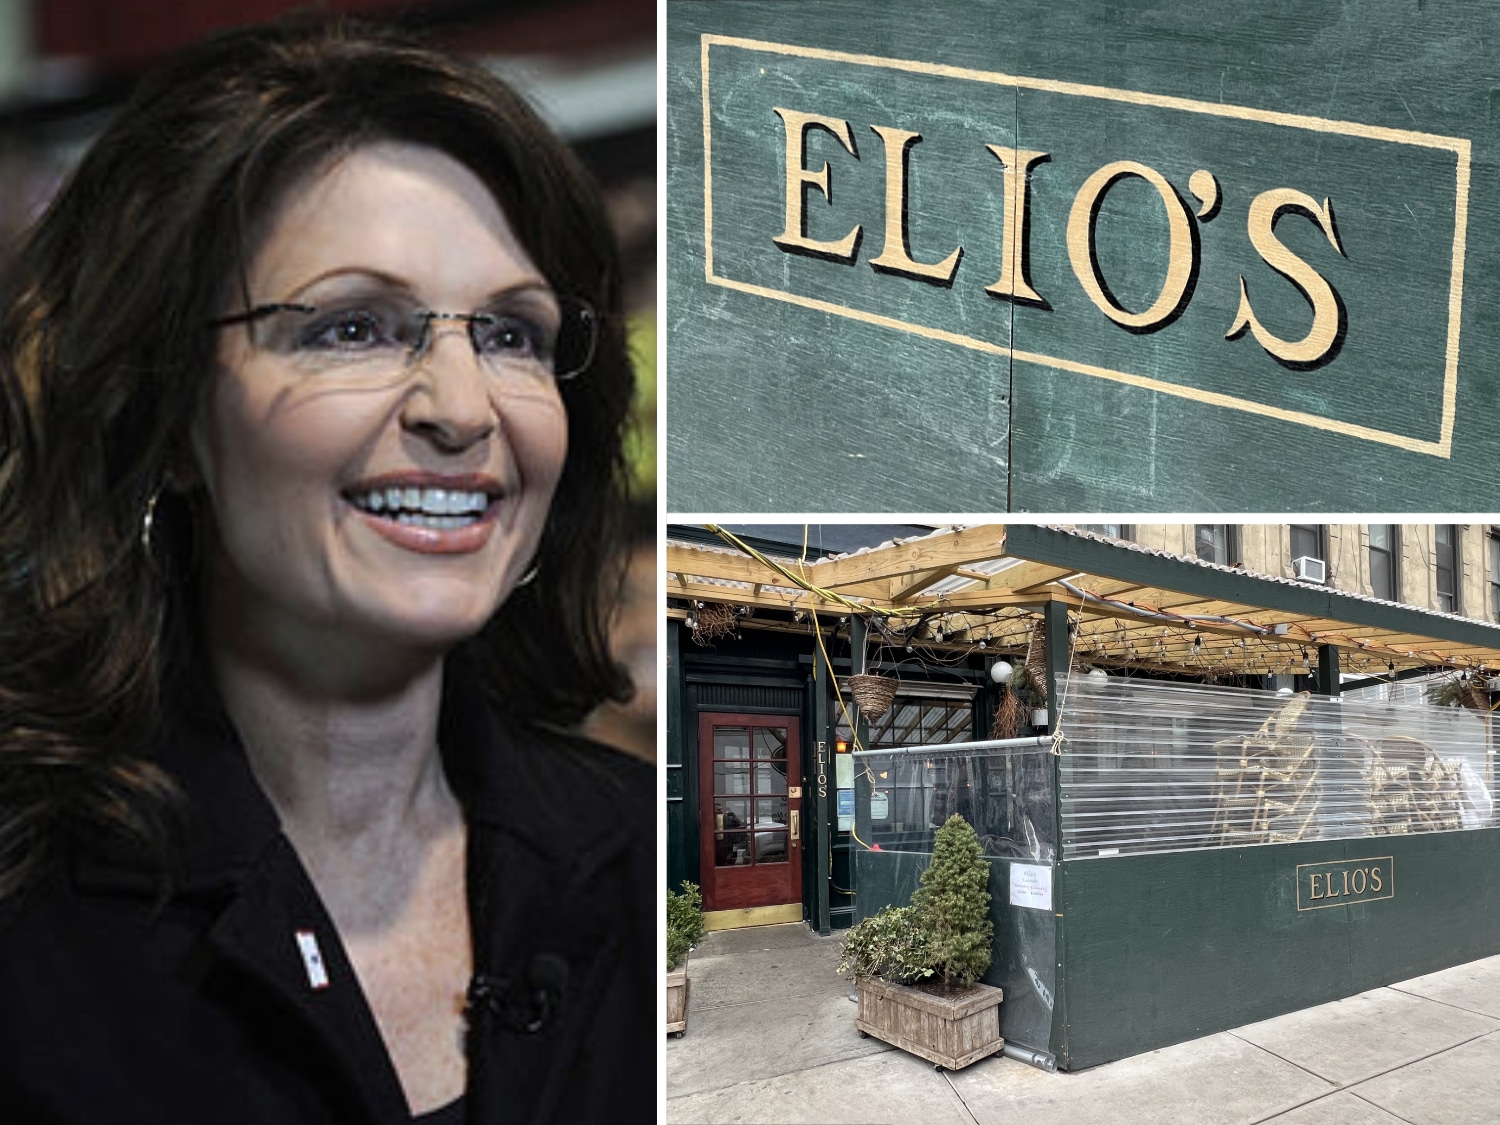 Former Alaska Gov. Sarah Palin tests positive for Covid after dining indoors at Elio's/Upper East Site